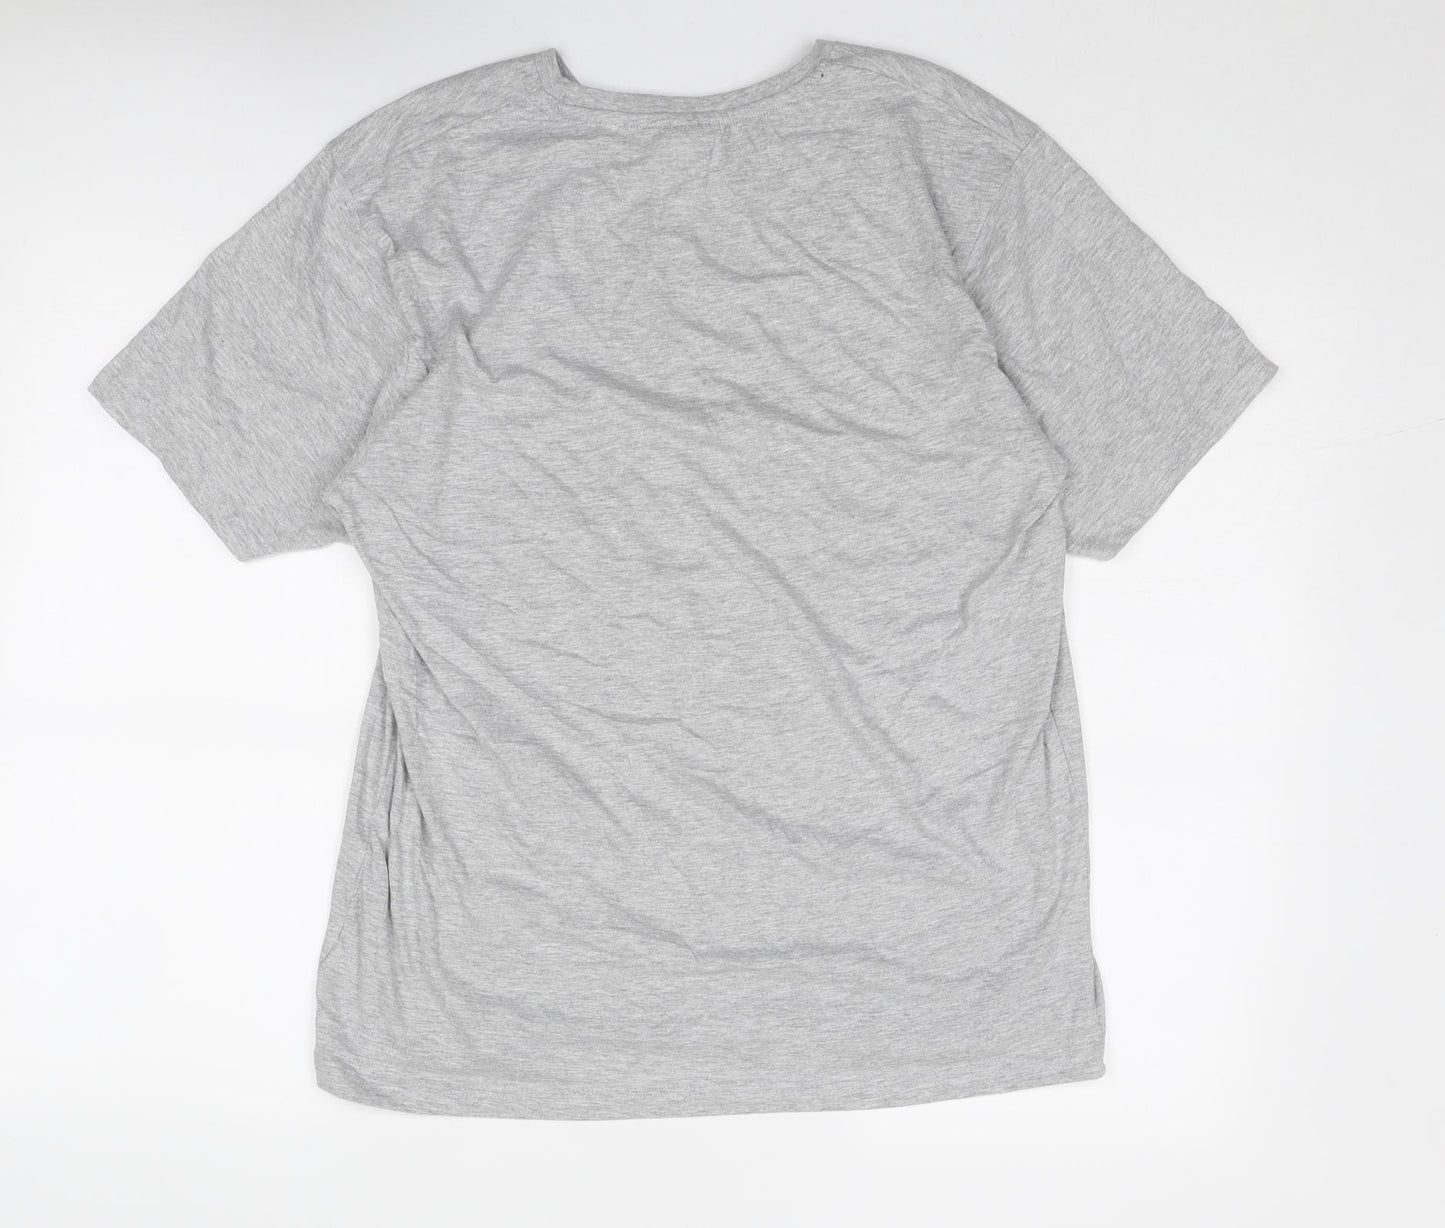 Game Of Thrones Mens Grey Cotton T-Shirt Size M Round Neck